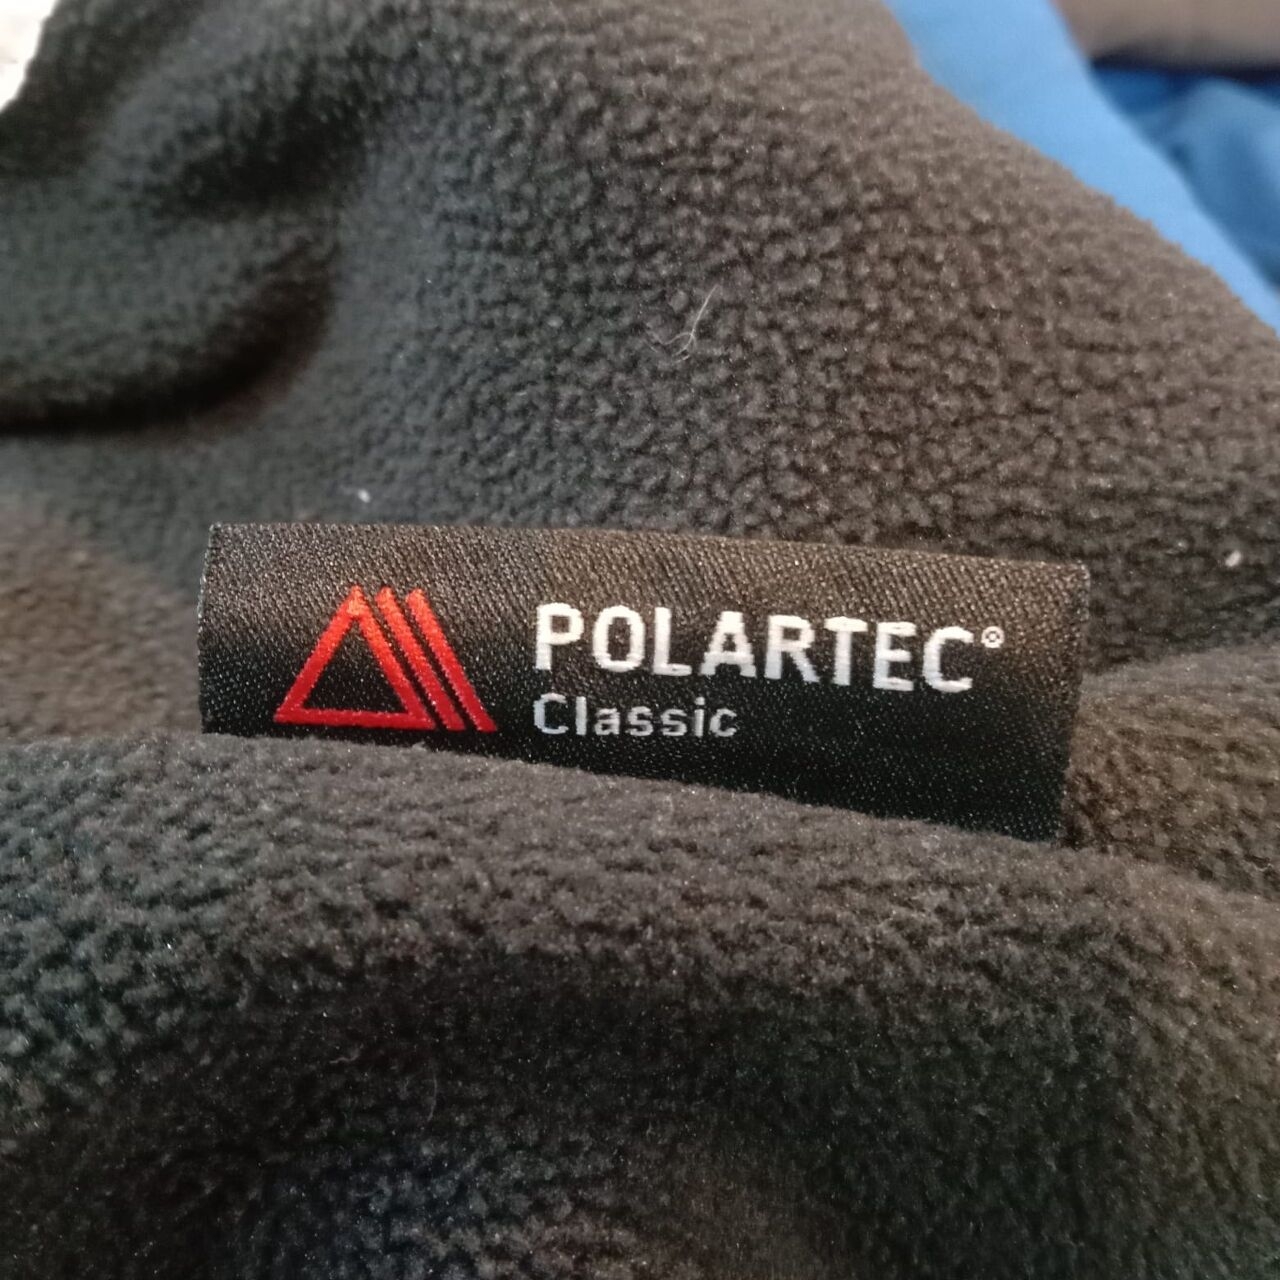 The North Face Polartec Classic Jacket 